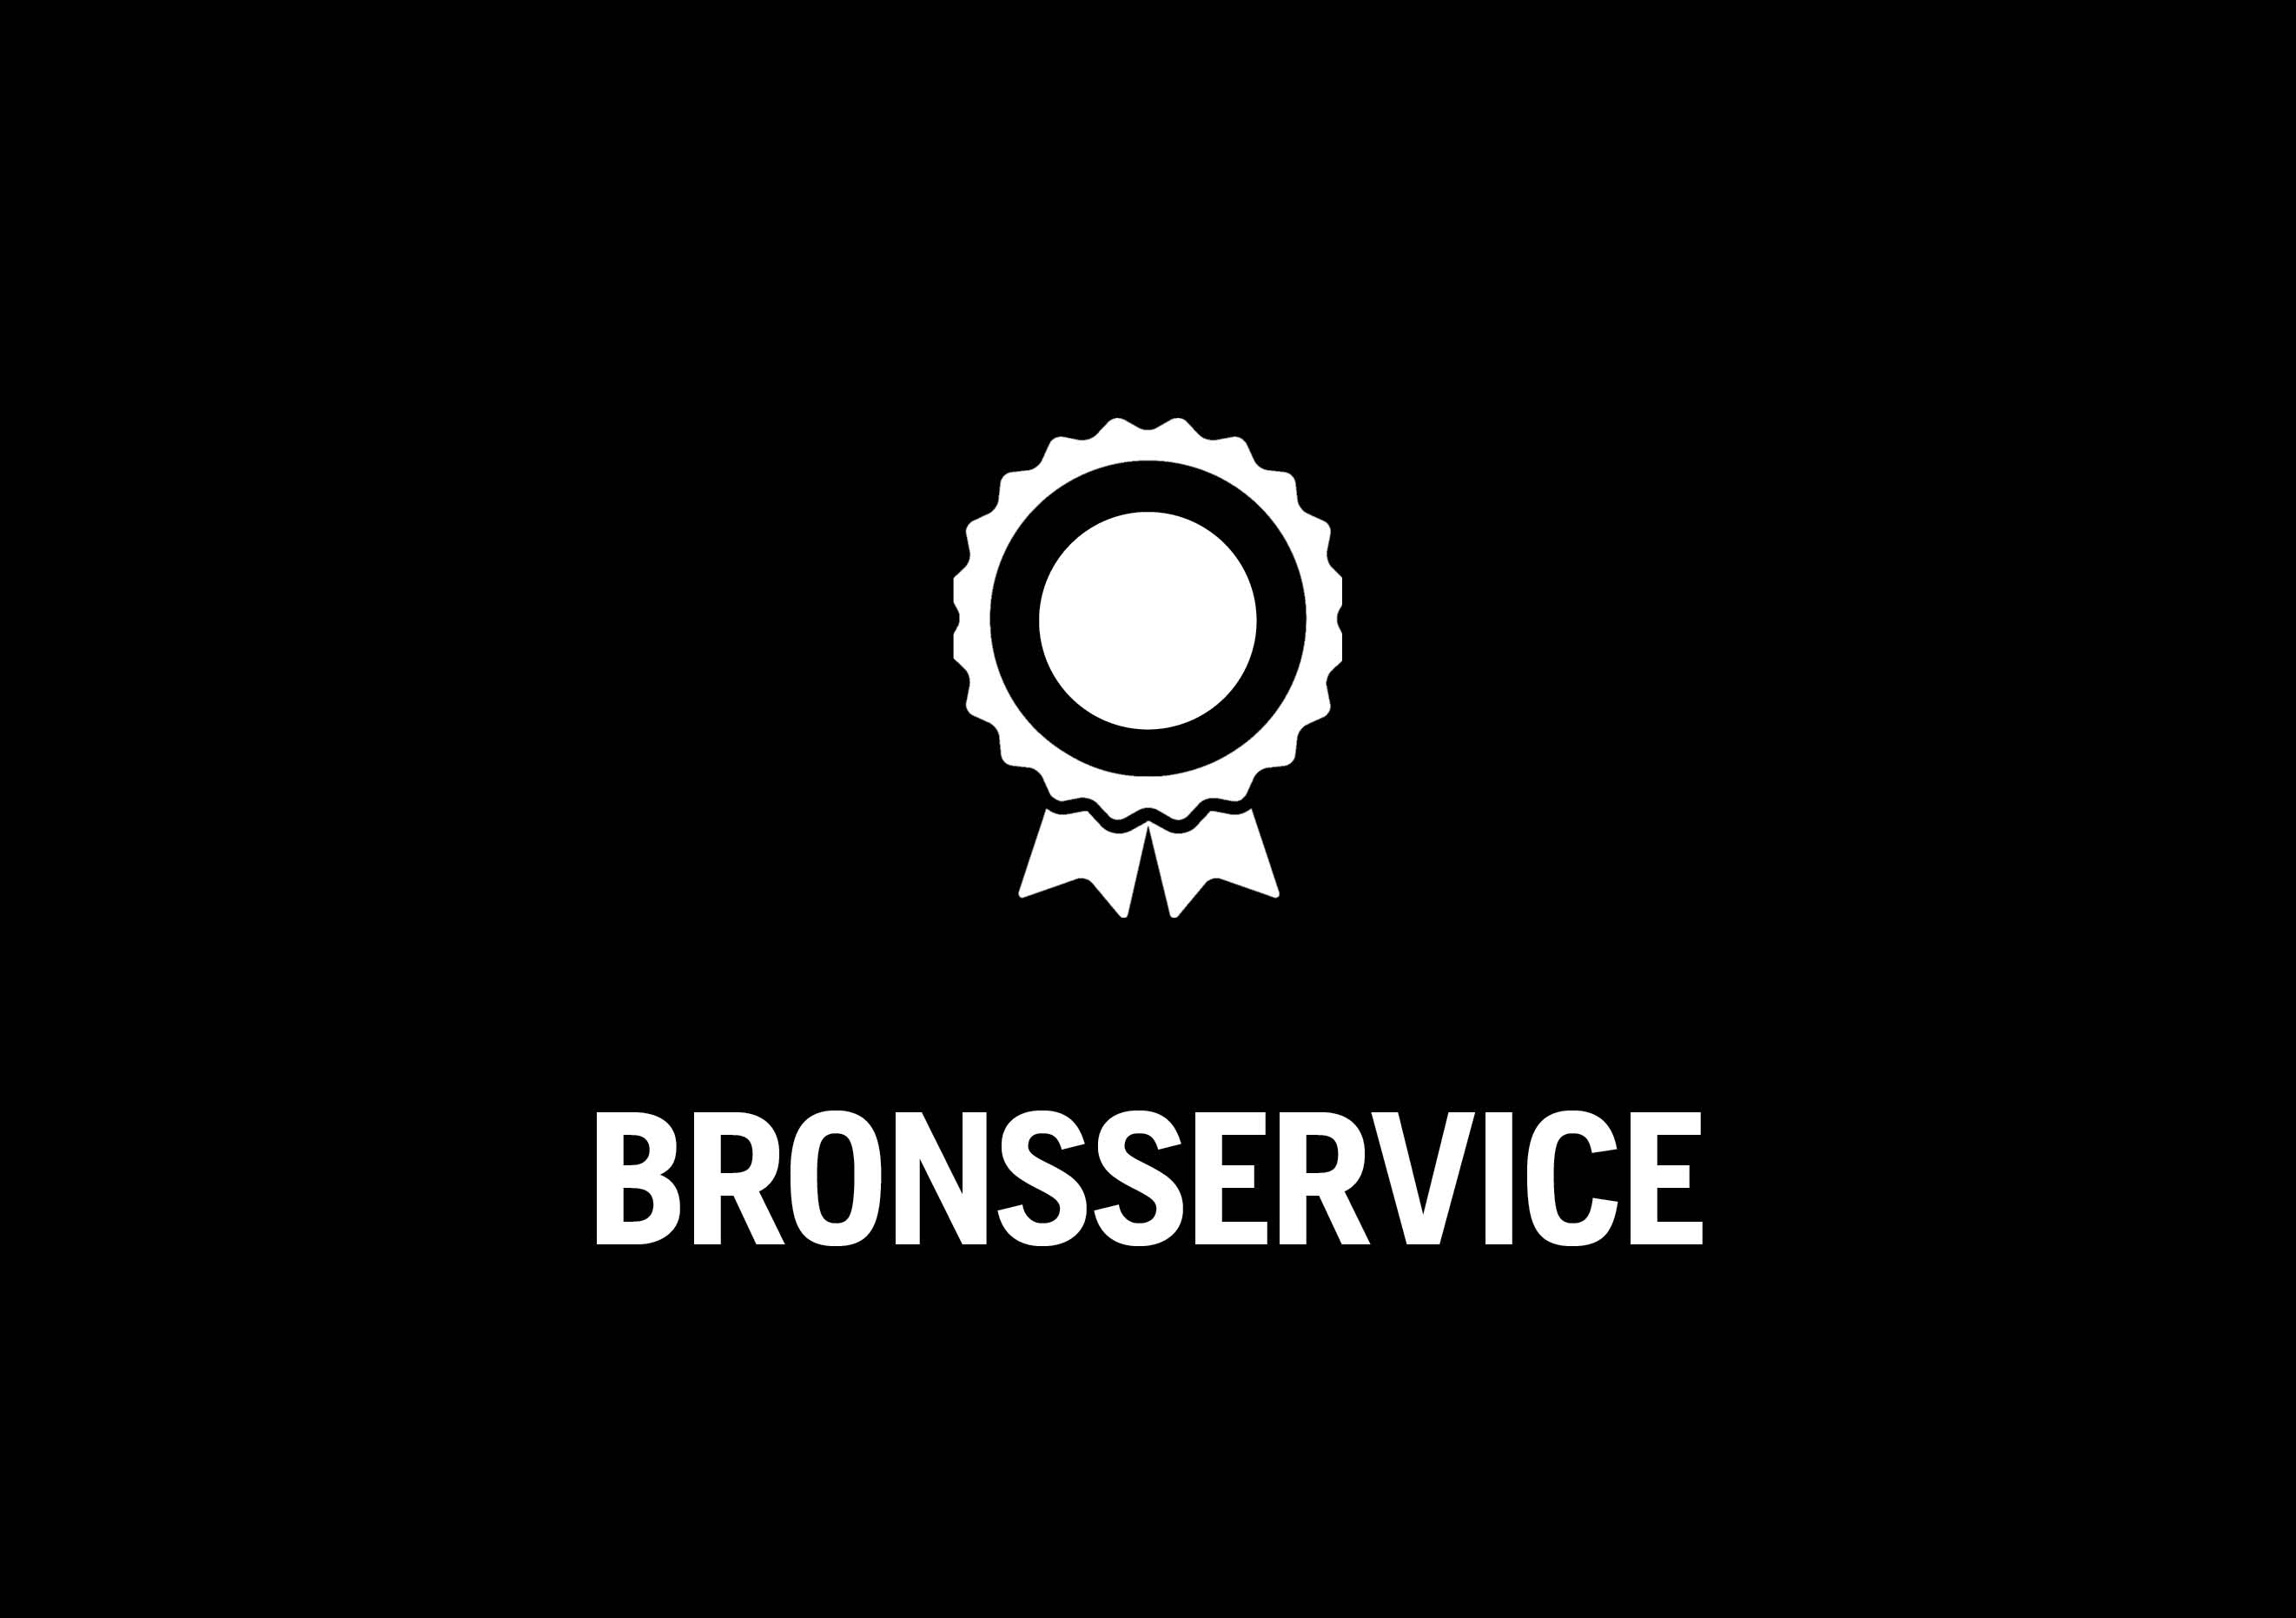 Bronsservice